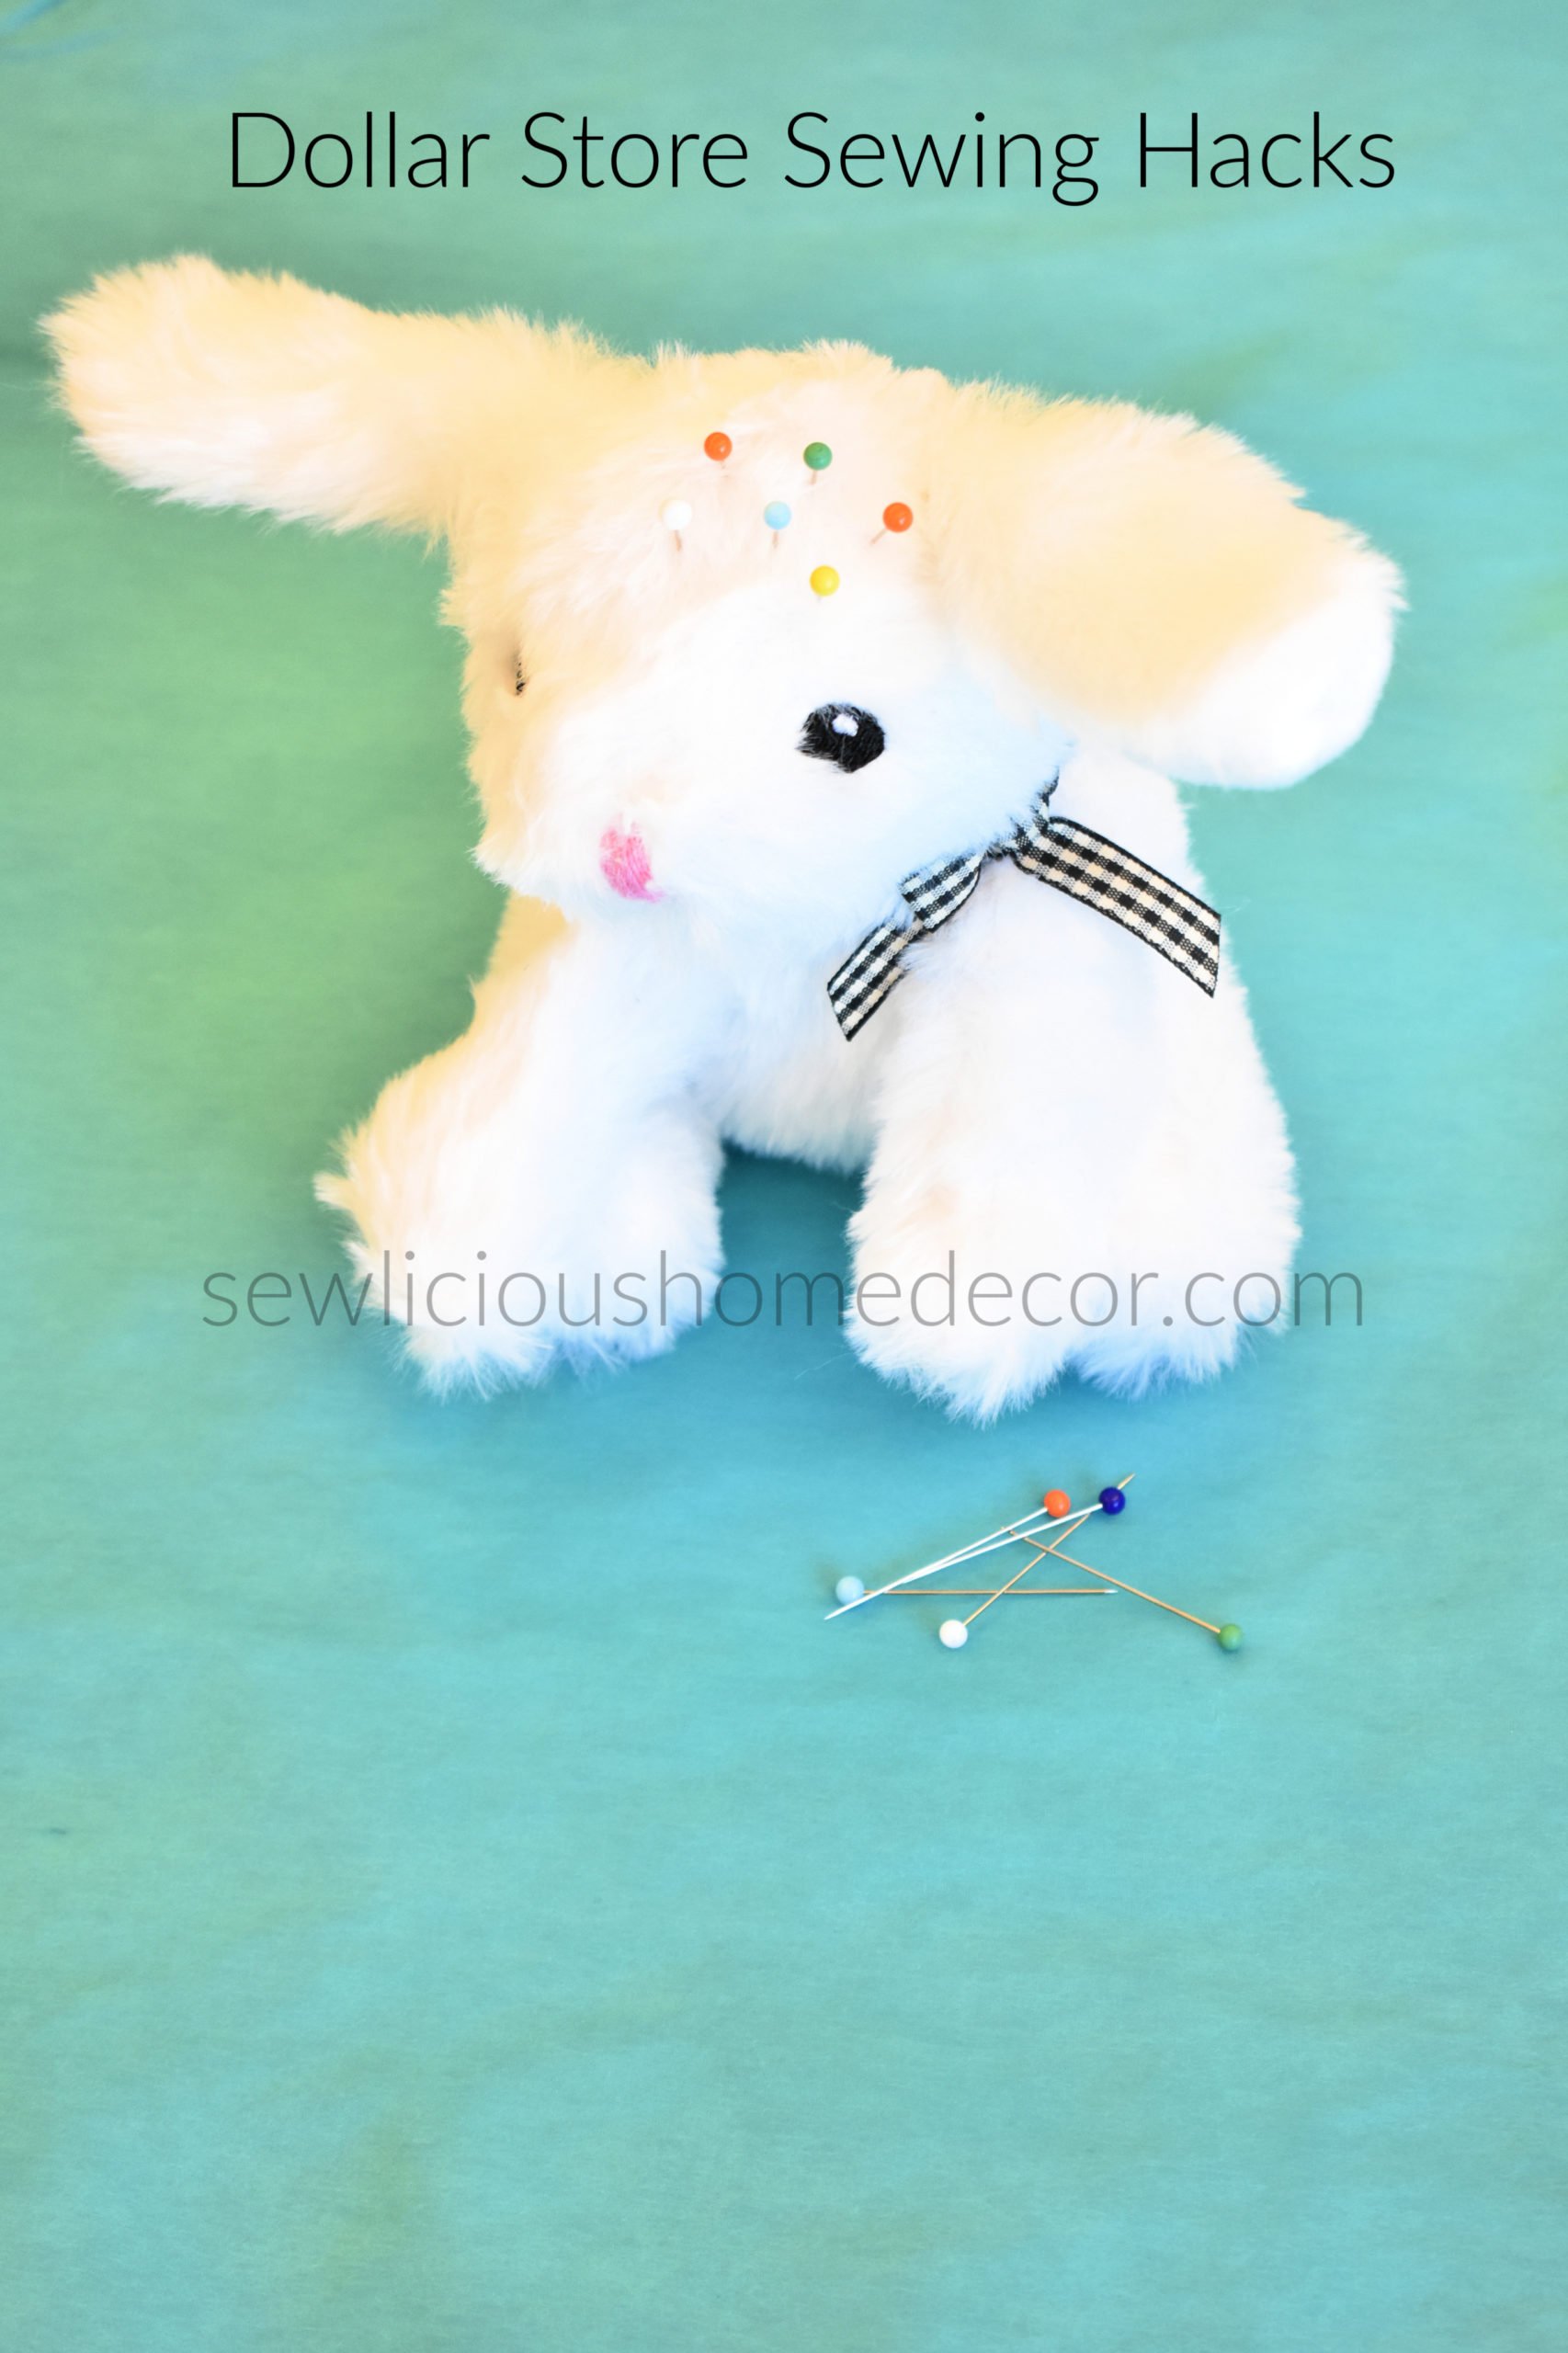 Dollar Store Sewing Hacks Mini Stuffed Animal Pin Cushion